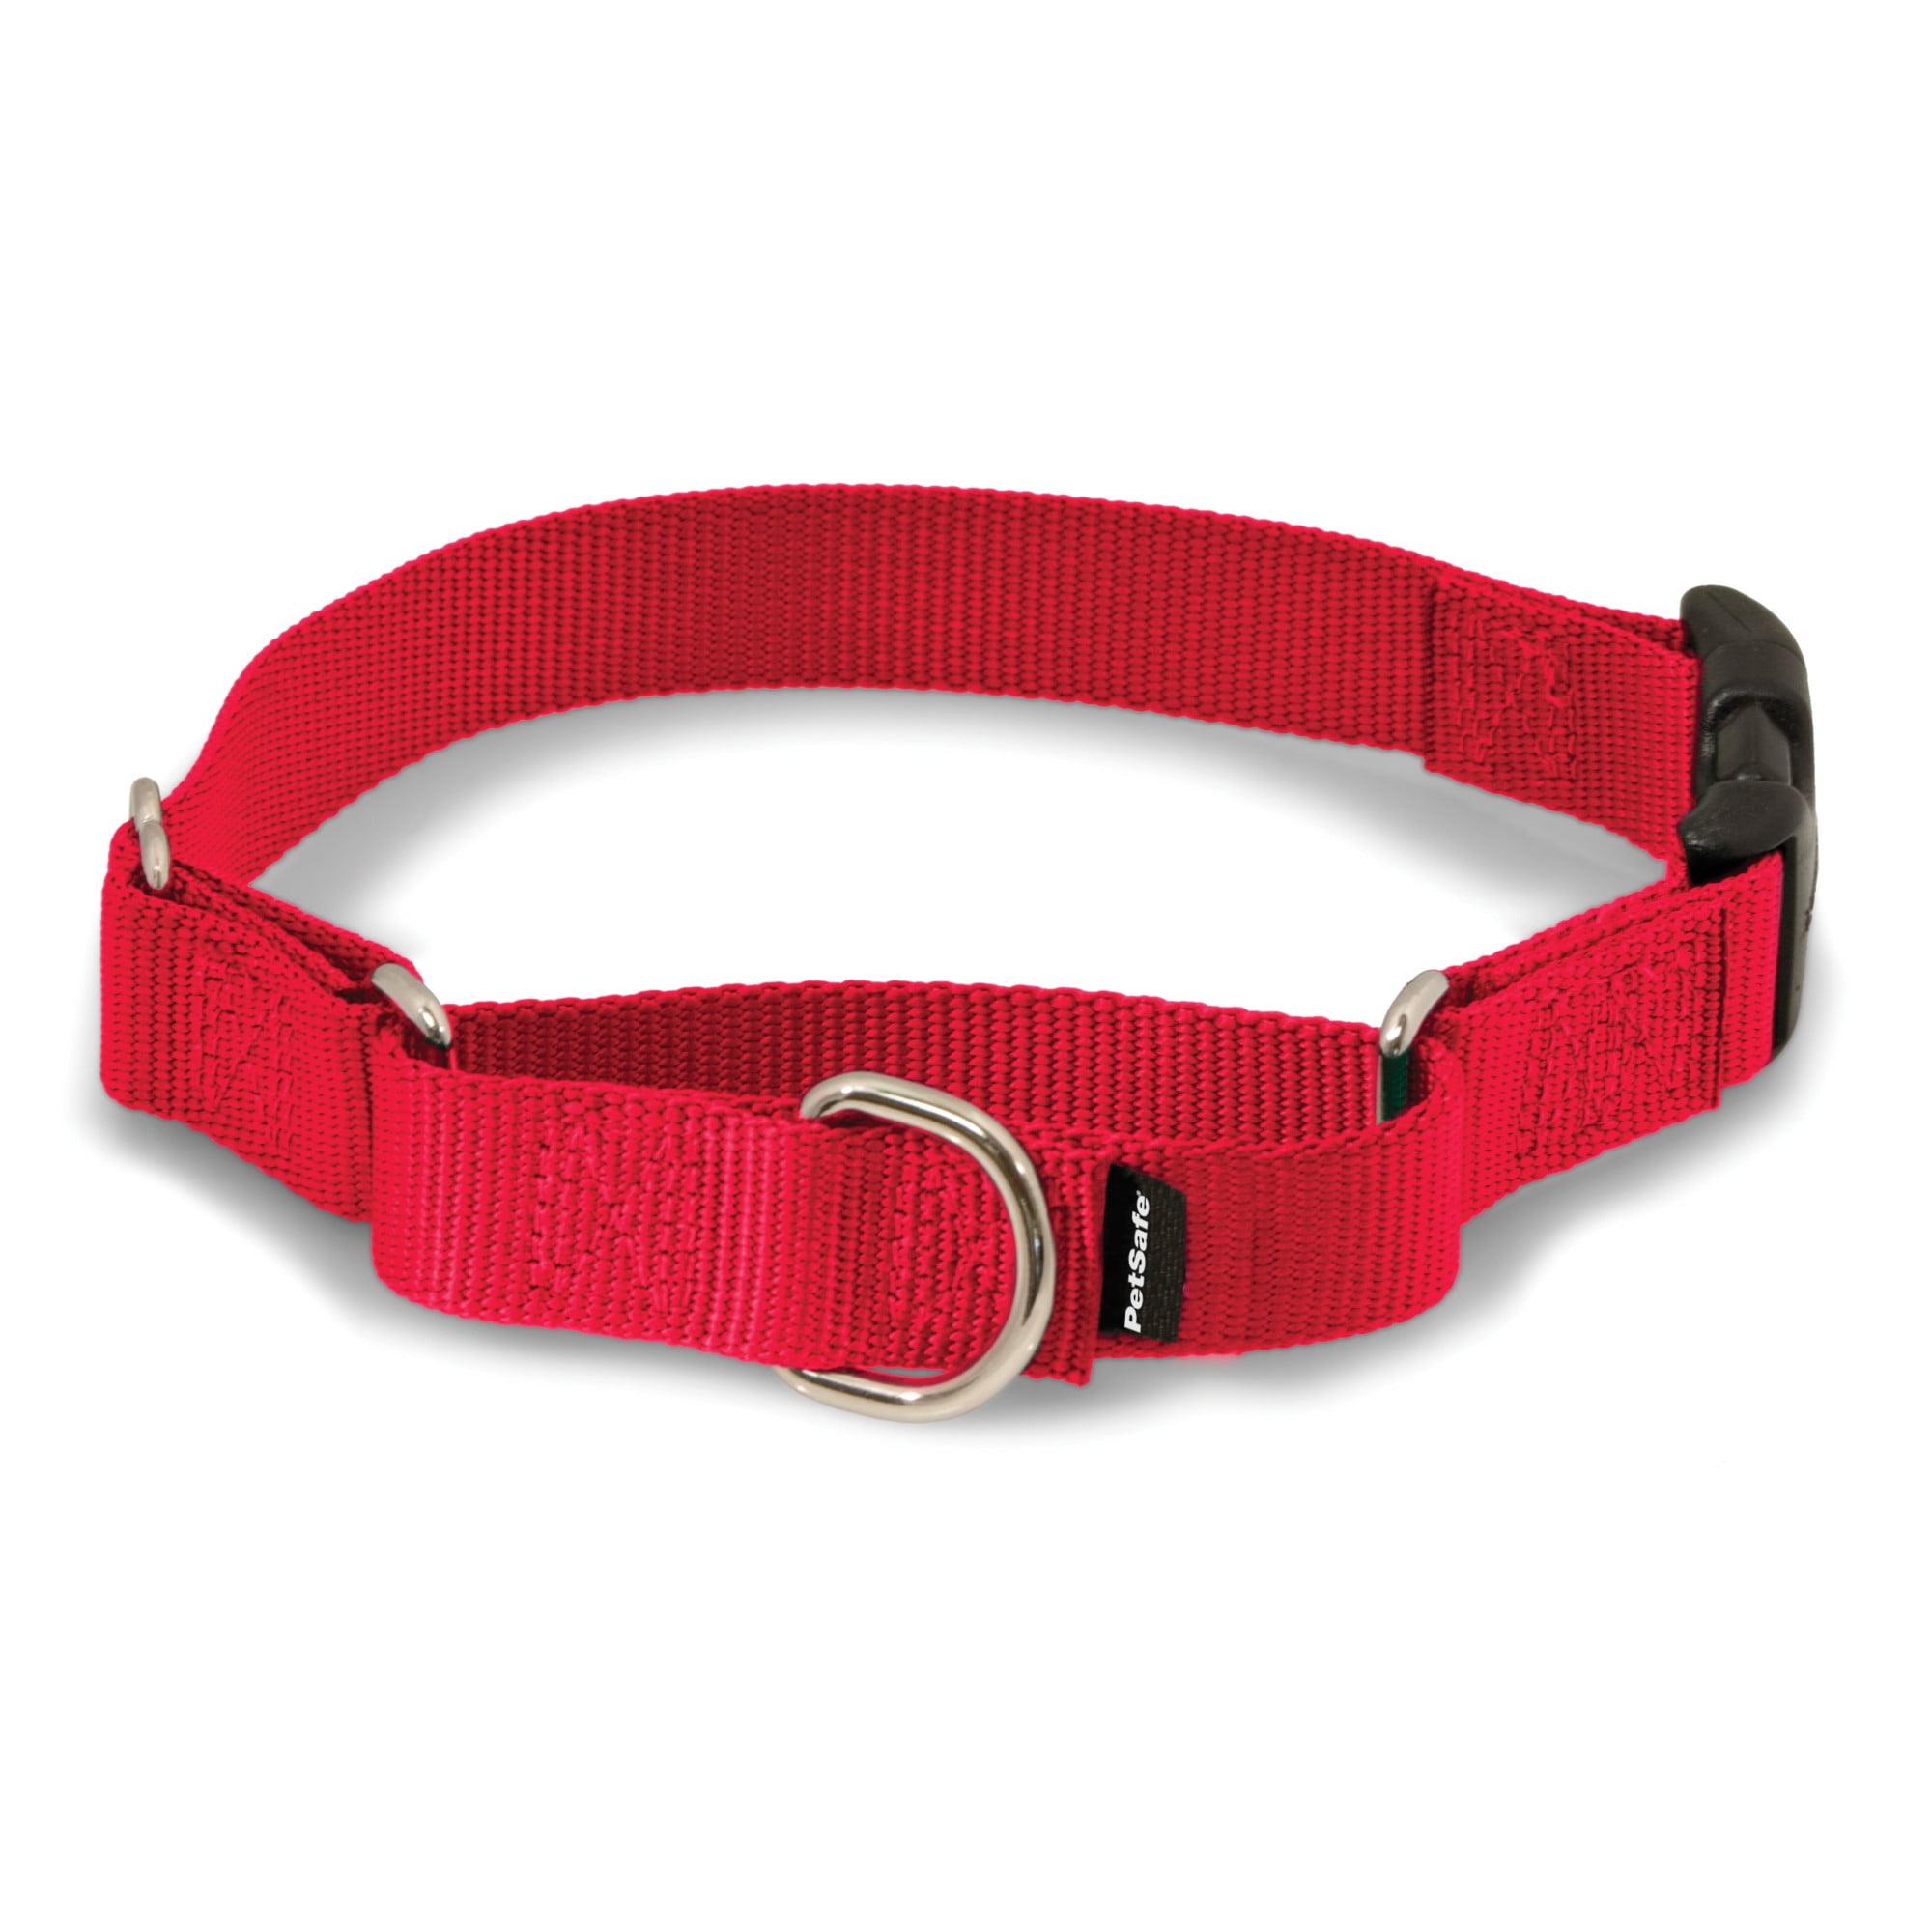 BASEBALLS ON RED print Dog collar and leash set you choose the size 